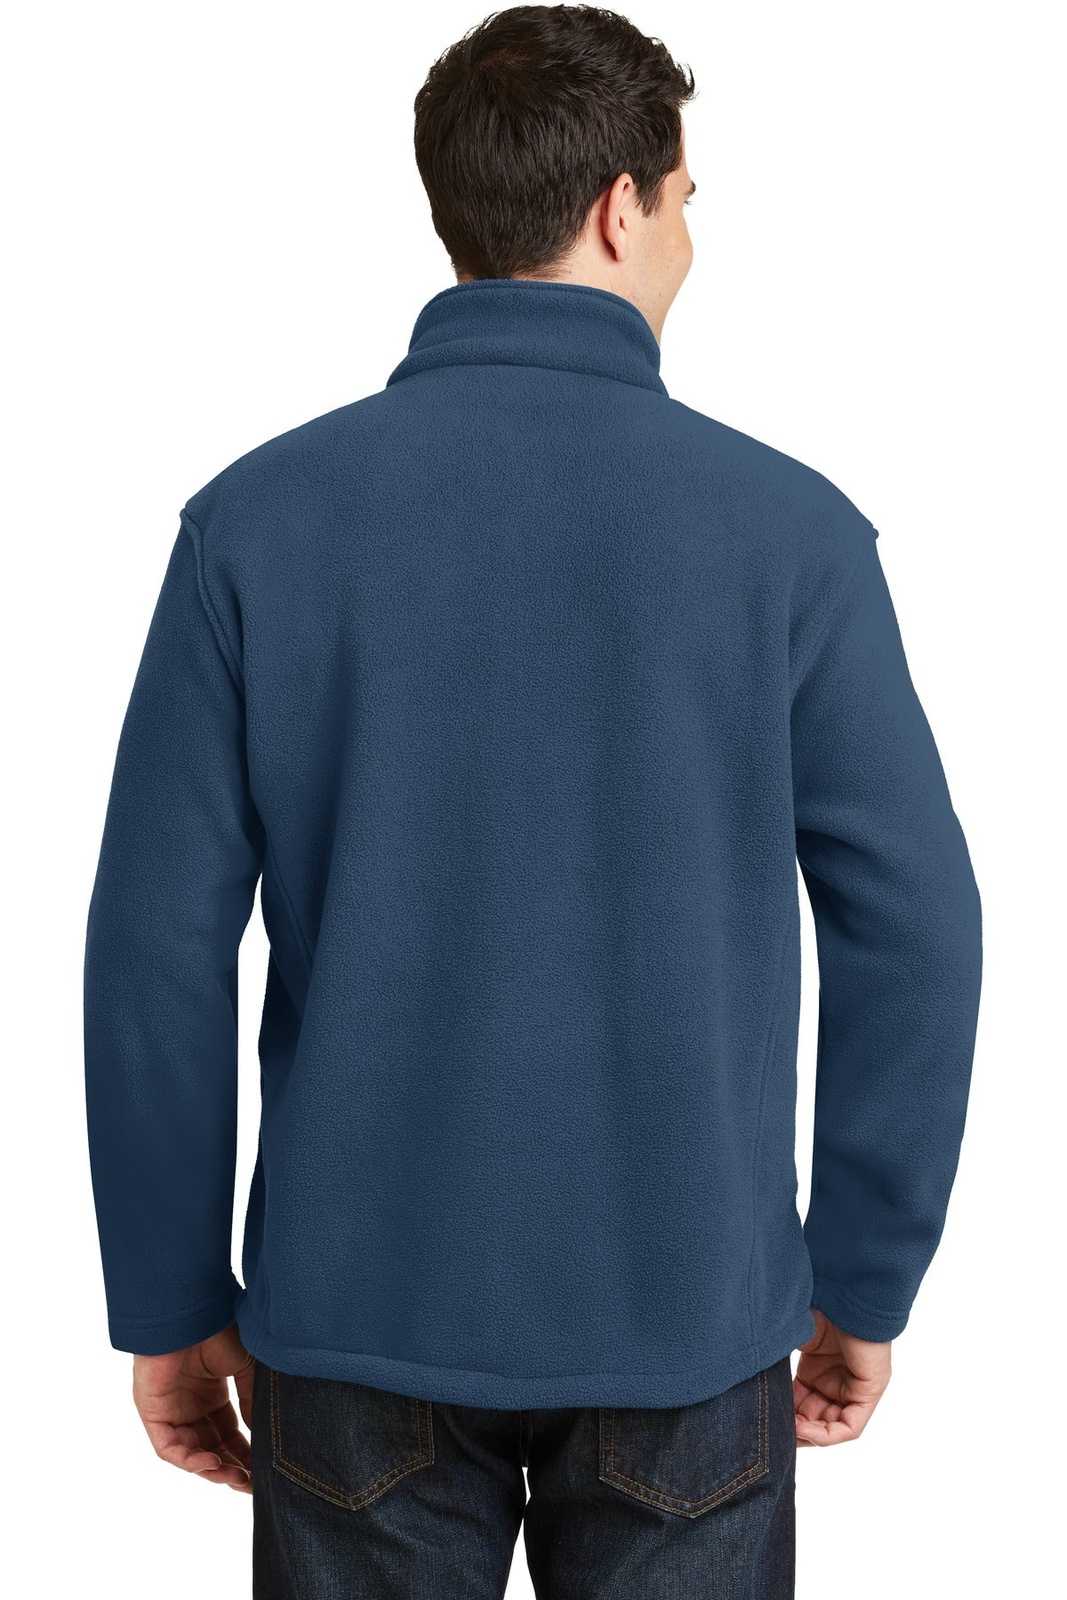 Port Authority F217 Value Fleece Jacket - Insignia Blue - HIT a Double - 2